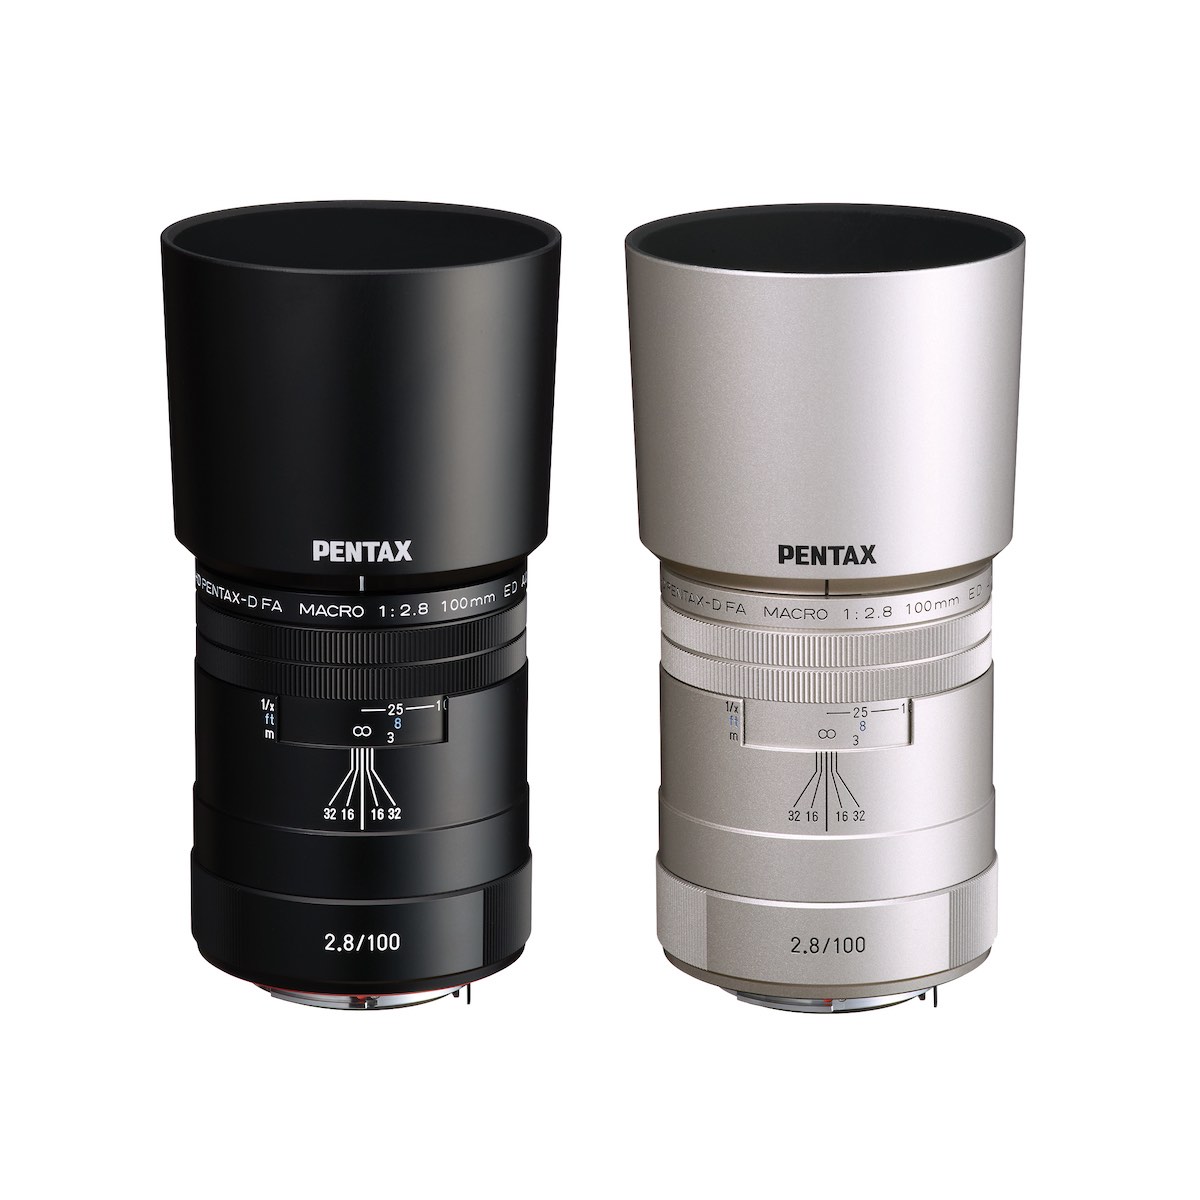 HD Pentax D FA Macro 100mm f/2.8 ED AW lens officially announced